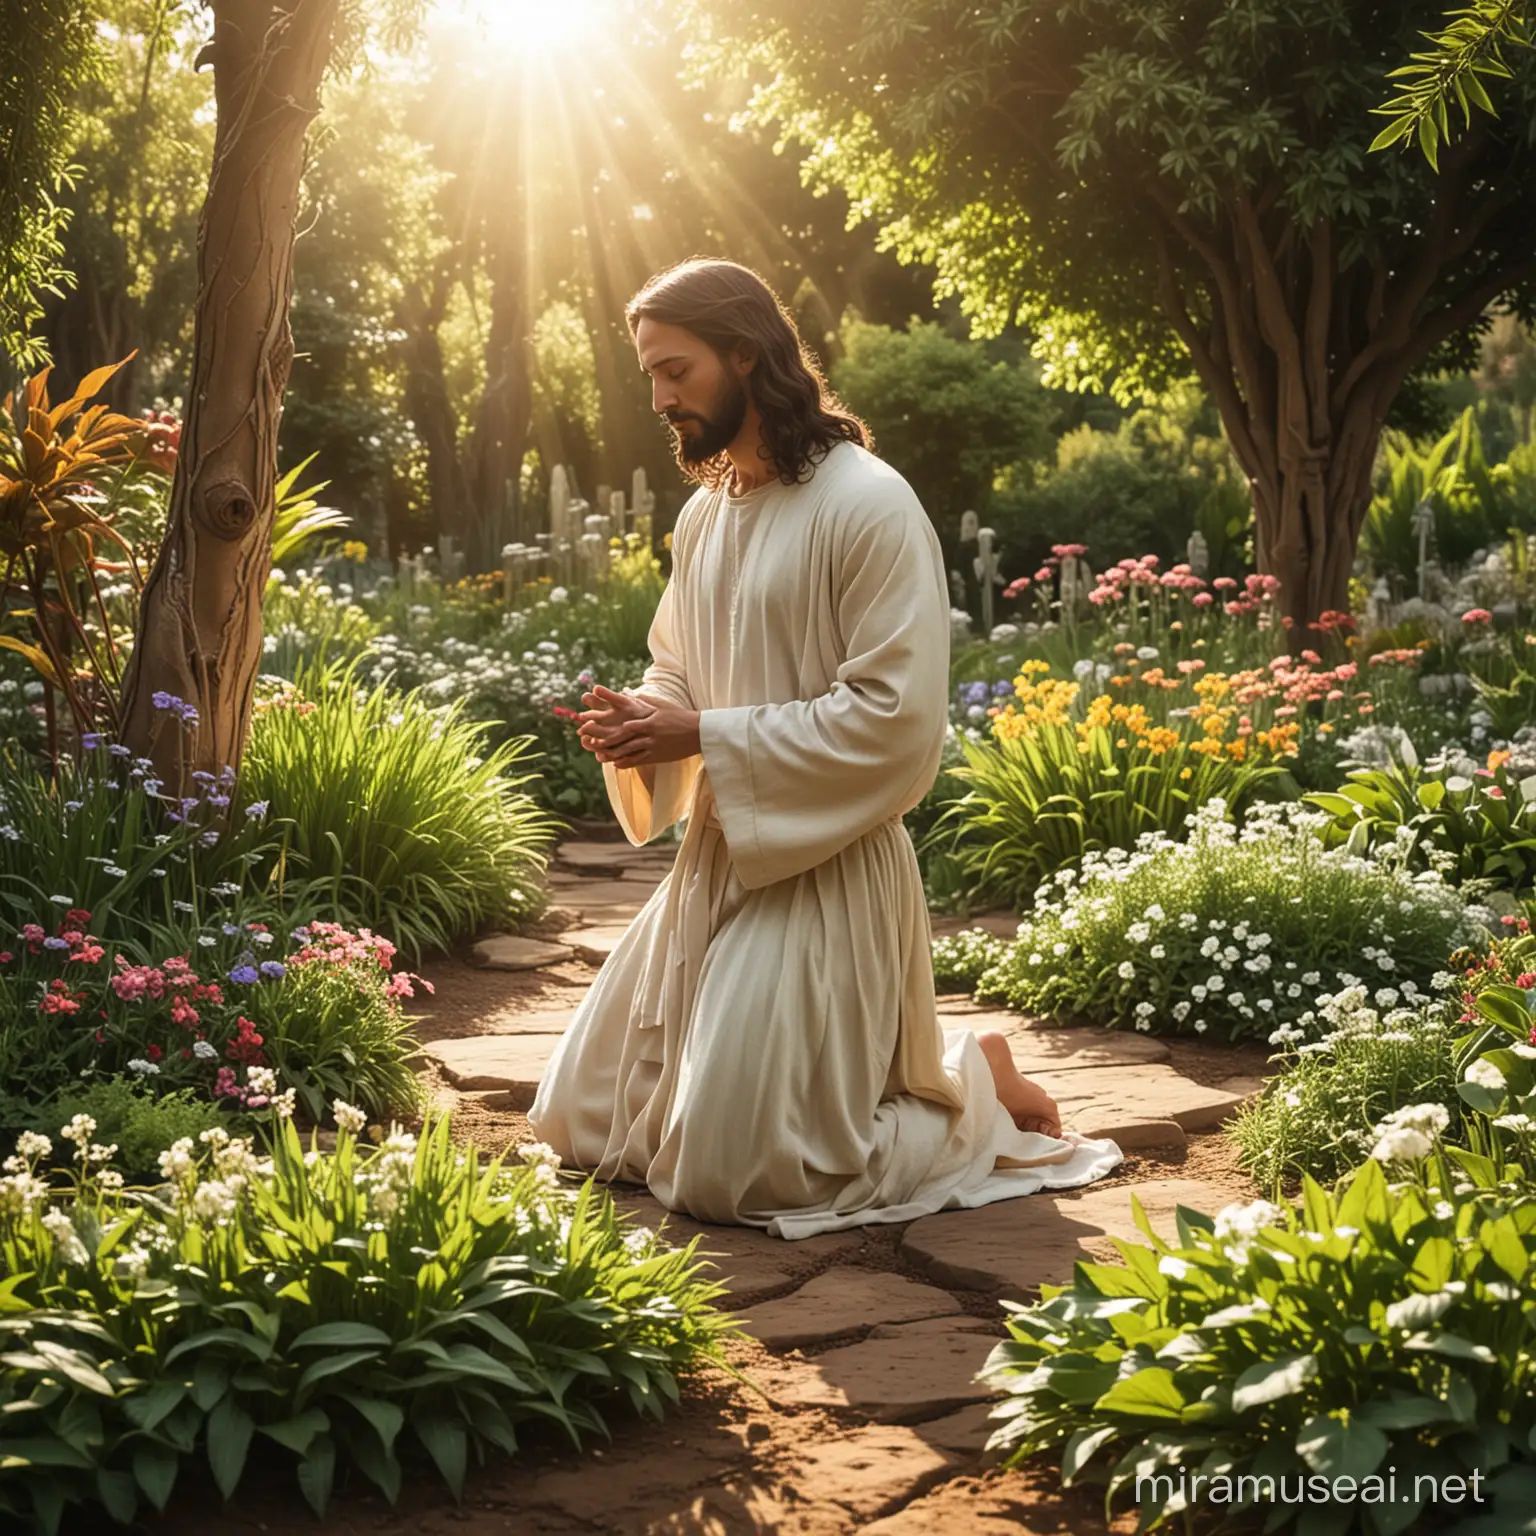 Jesus Christ kneeling and praying in a beautiful garden